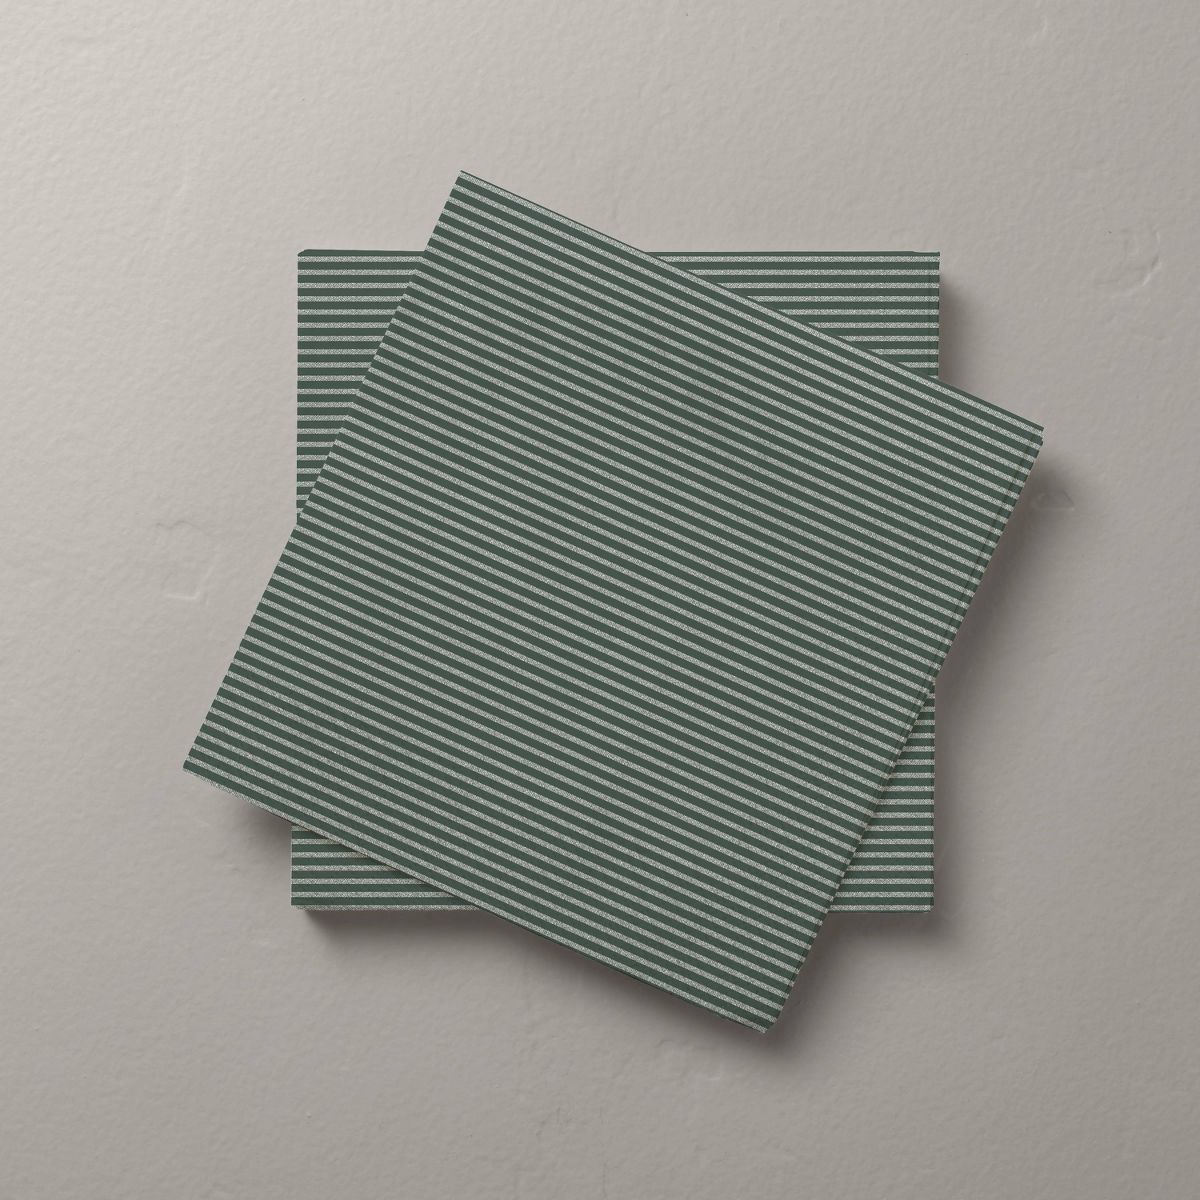 14ct Microstripe Paper Lunch Napkins Dark Green/Cream - Hearth & Hand™ with Magnolia | Target